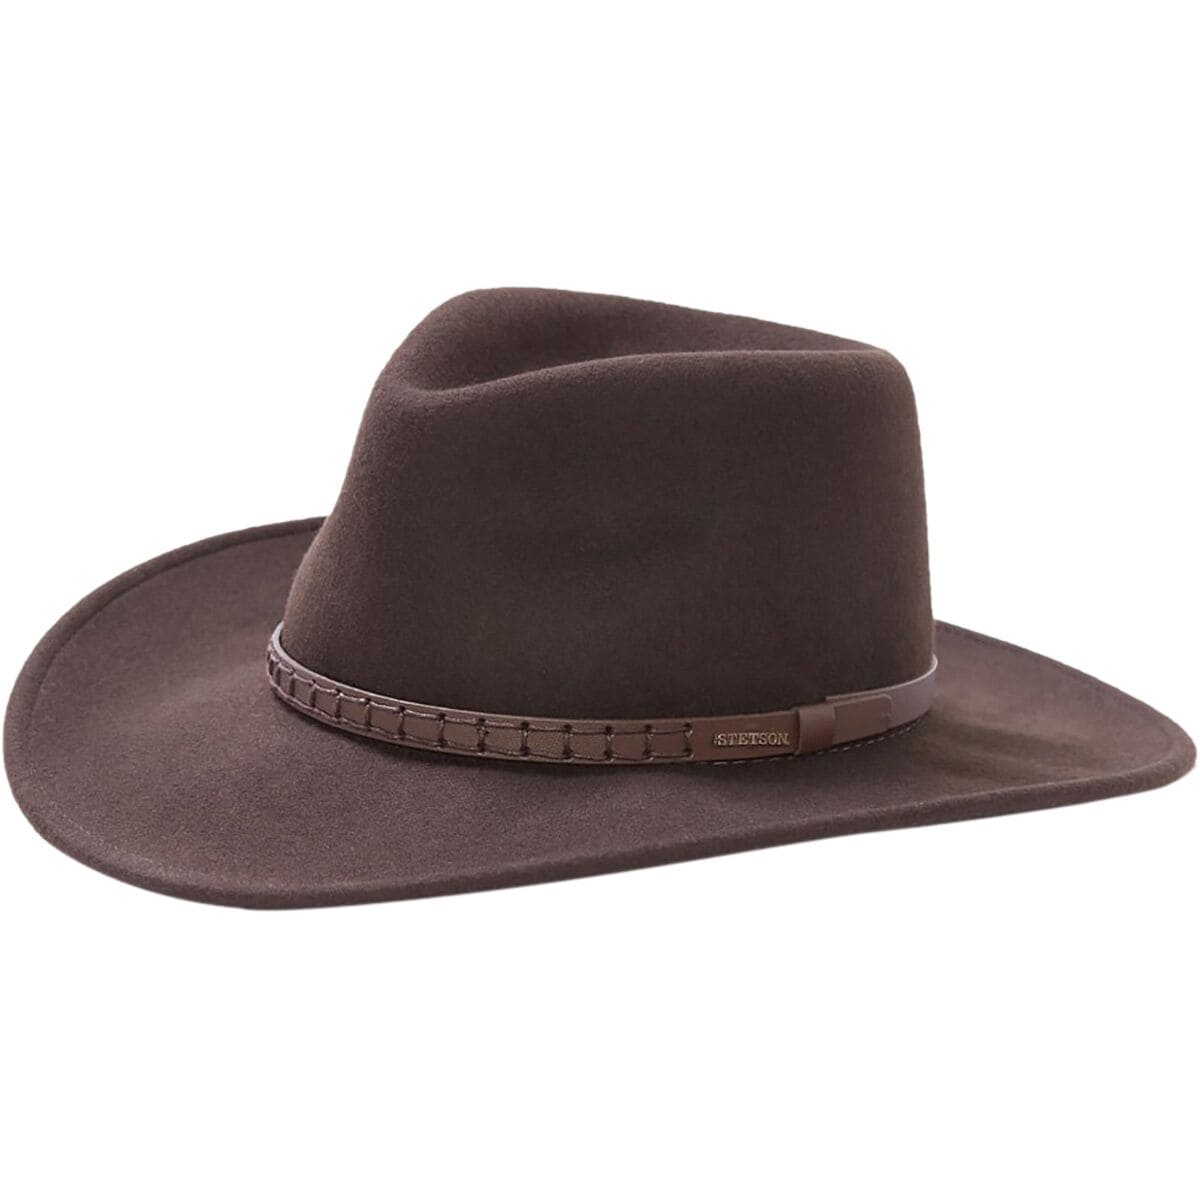 Stetson Sturgis Wool Hat - Cordova